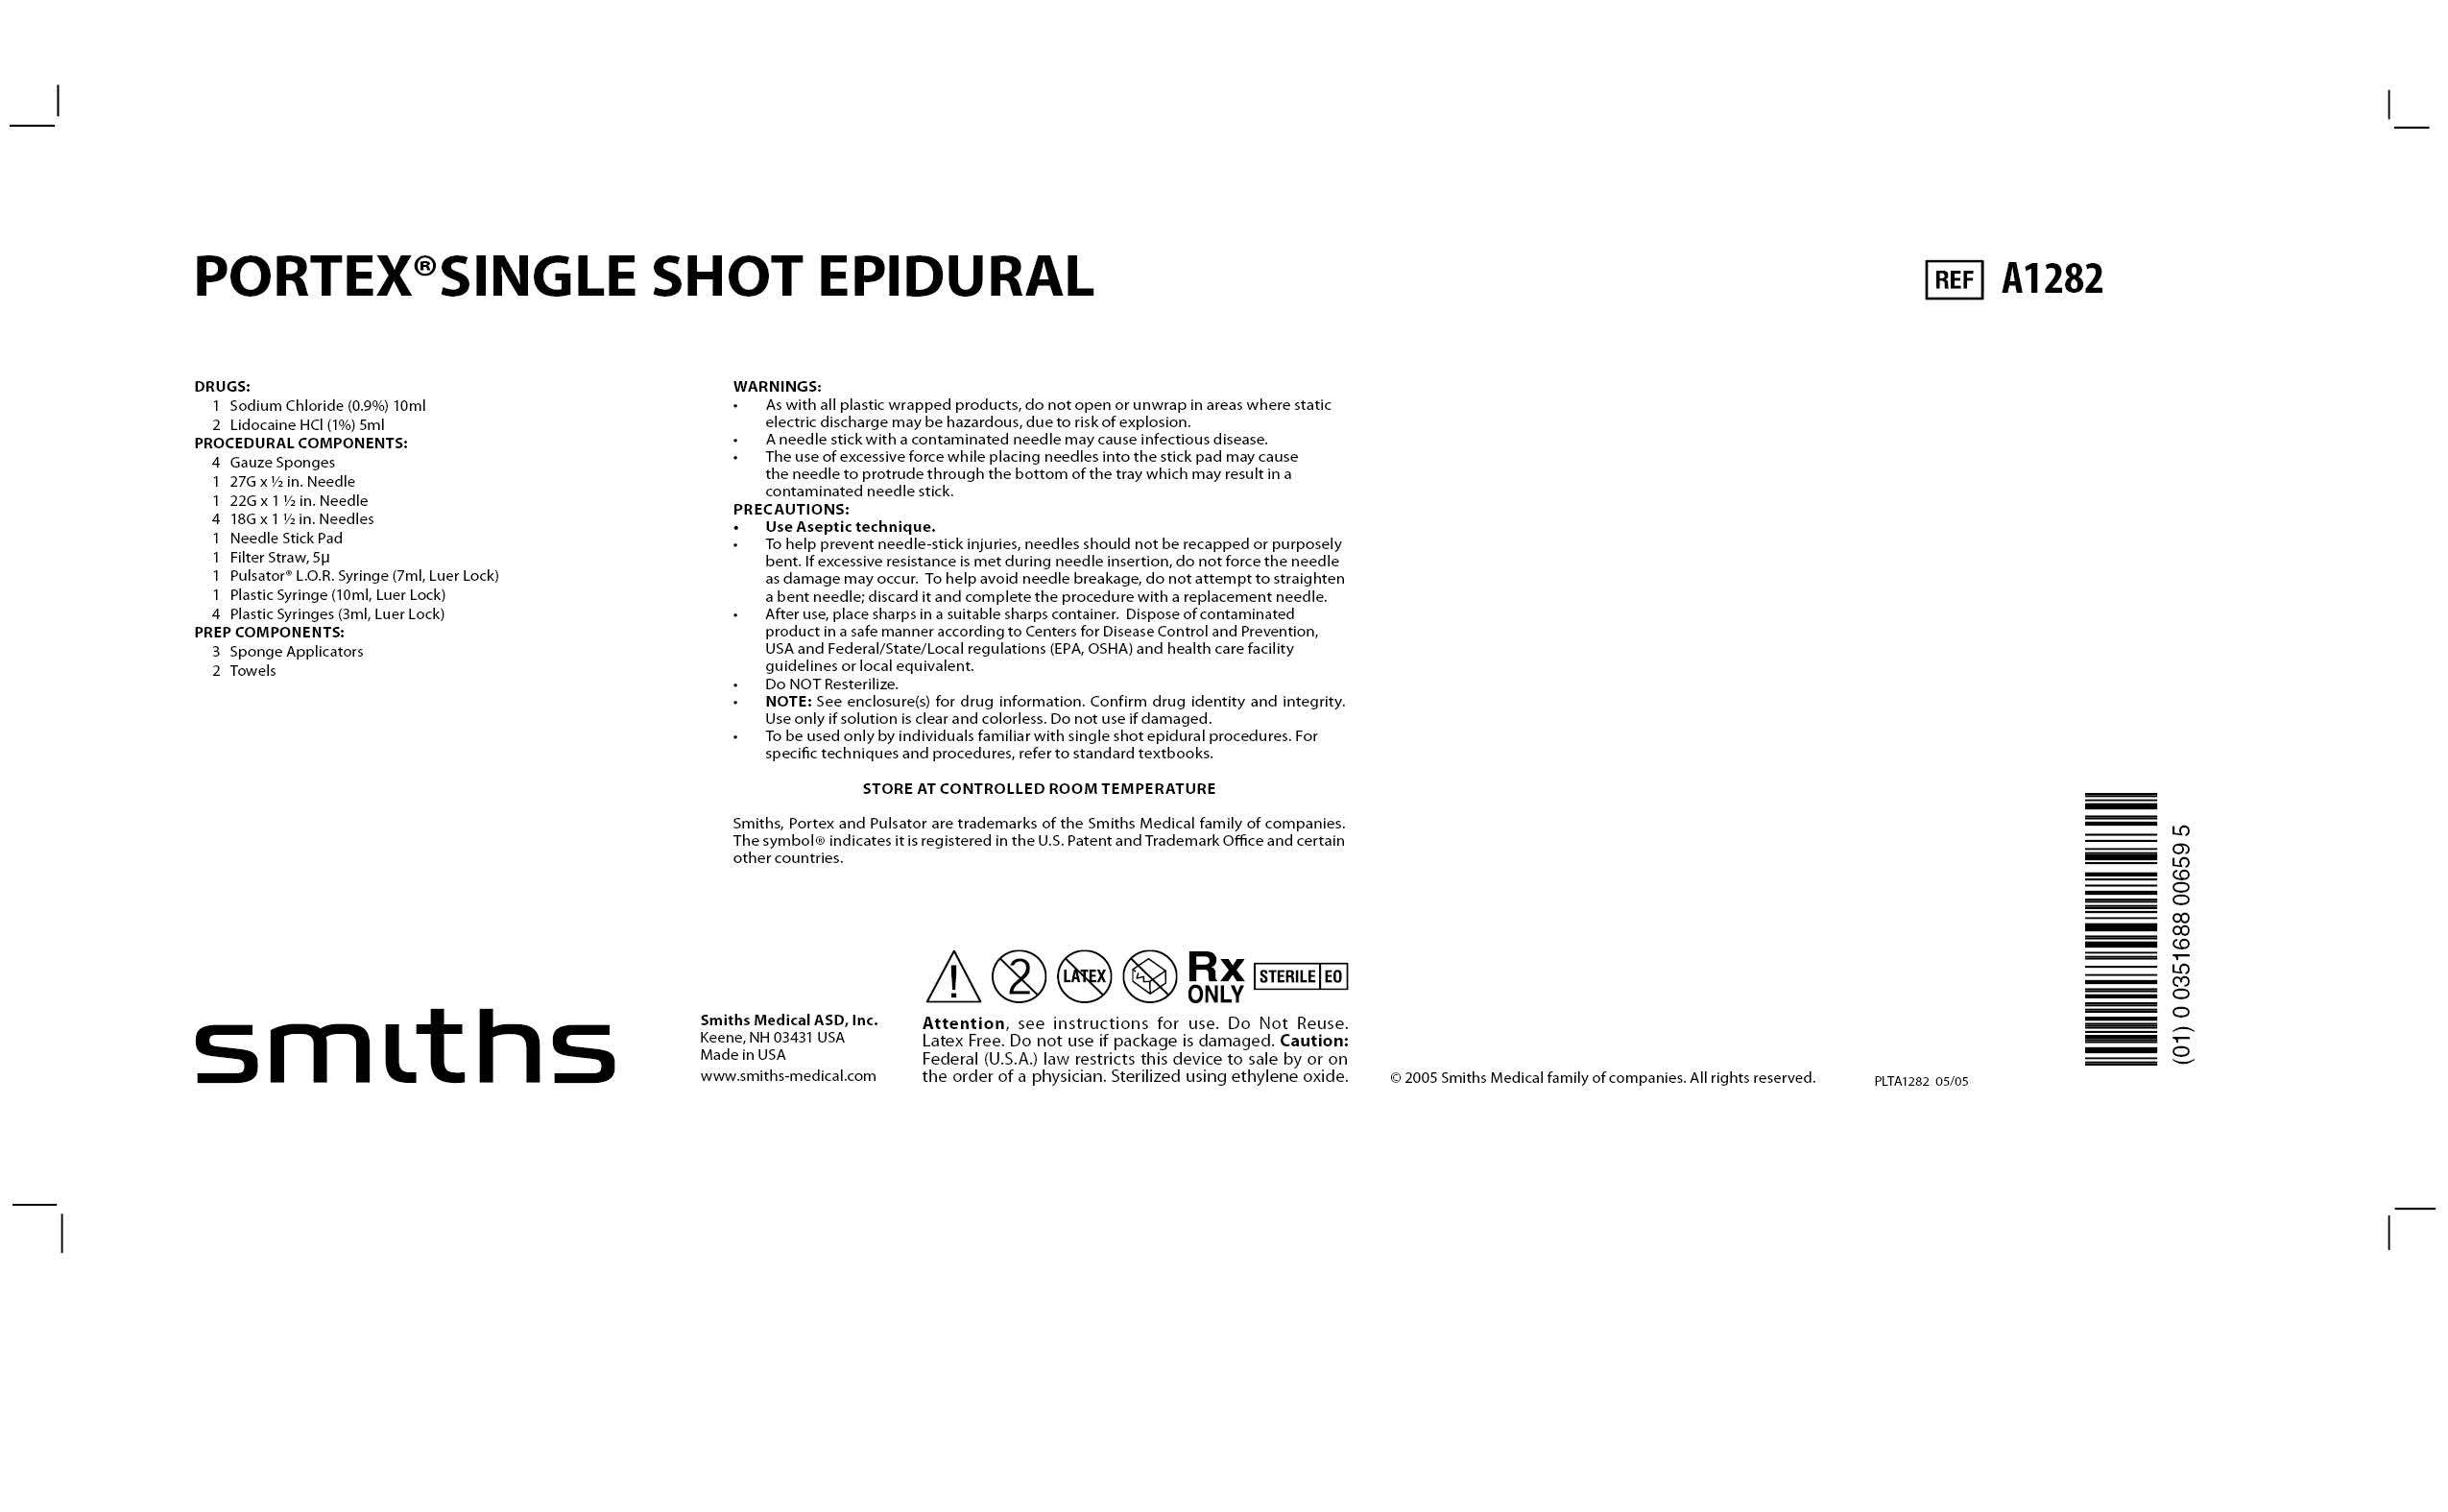 A1282 PORTEX SINGLE SHOT EPIDURAL